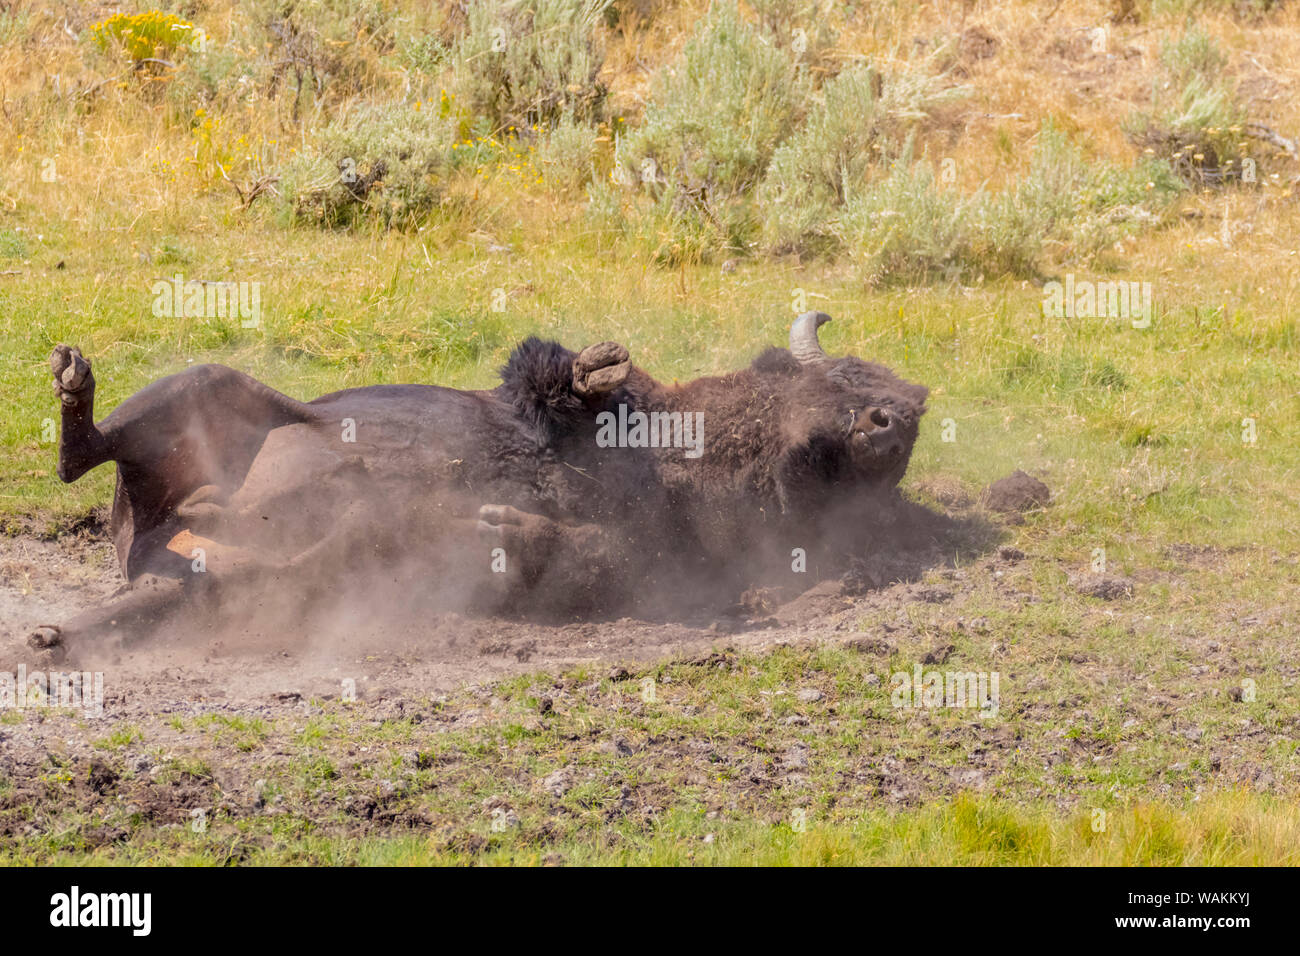 USA, Wyoming, Yellowstone National Park. Büffel in Staub. Credit: Fred Herr/Jaynes Galerie/DanitaDelimont.com Stockfoto